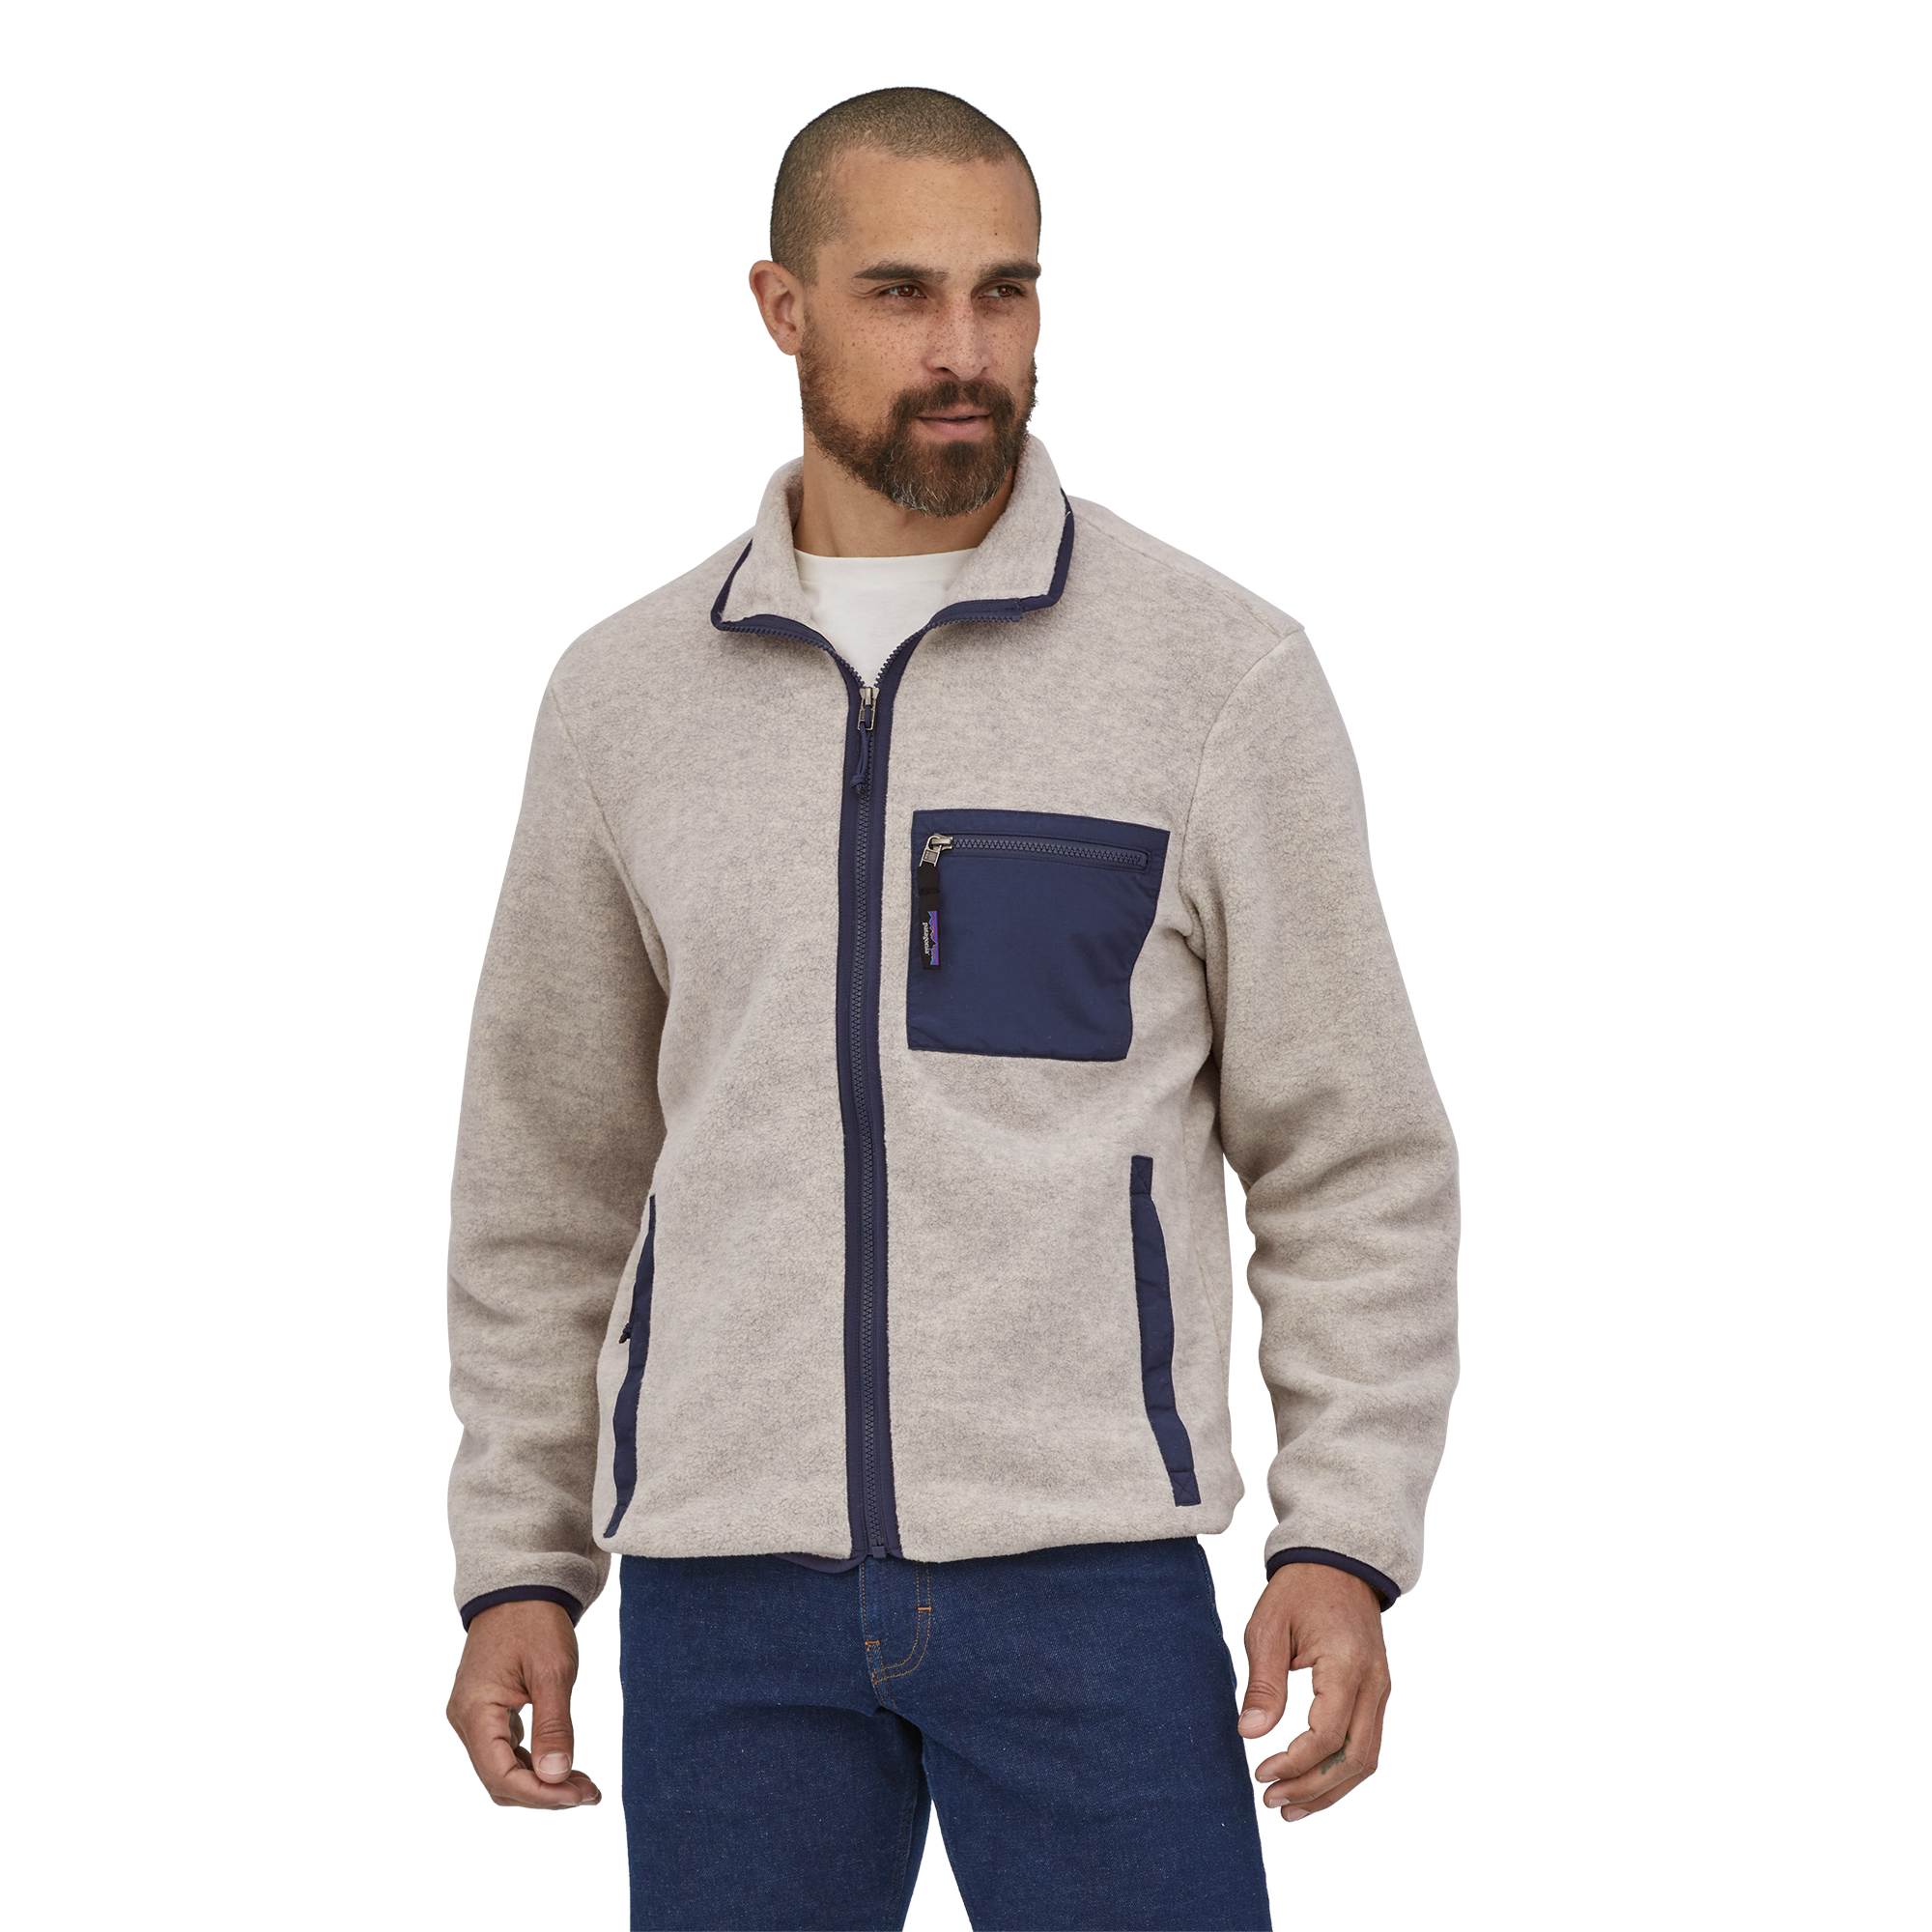 Patagonia Men's Synchilla® Fleece Jacket